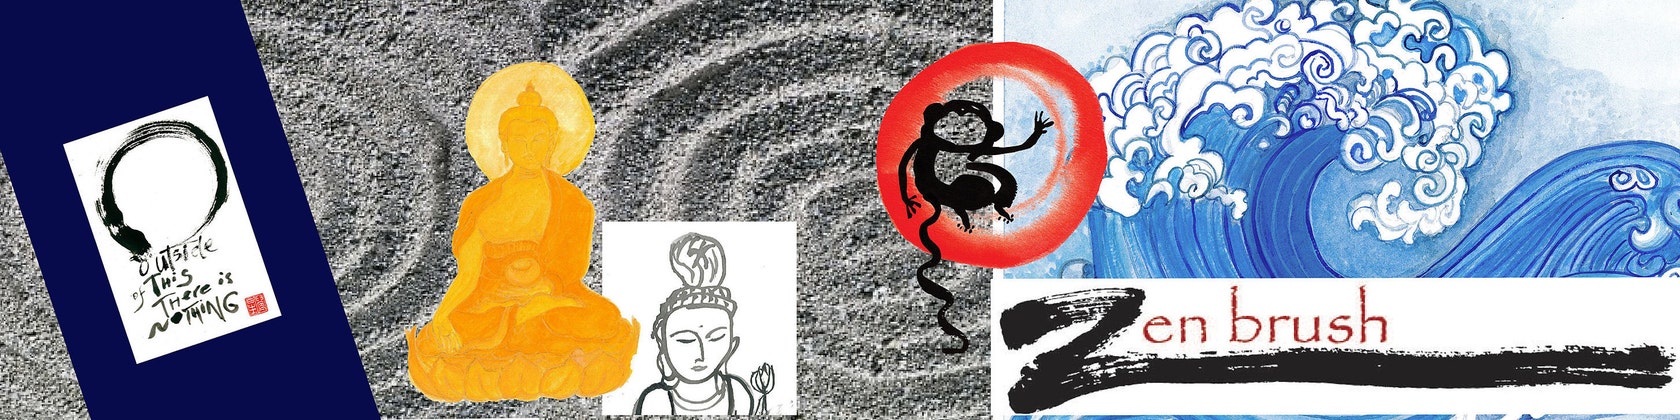 enlightening and spirited zen cards paintings art by ZenBrush